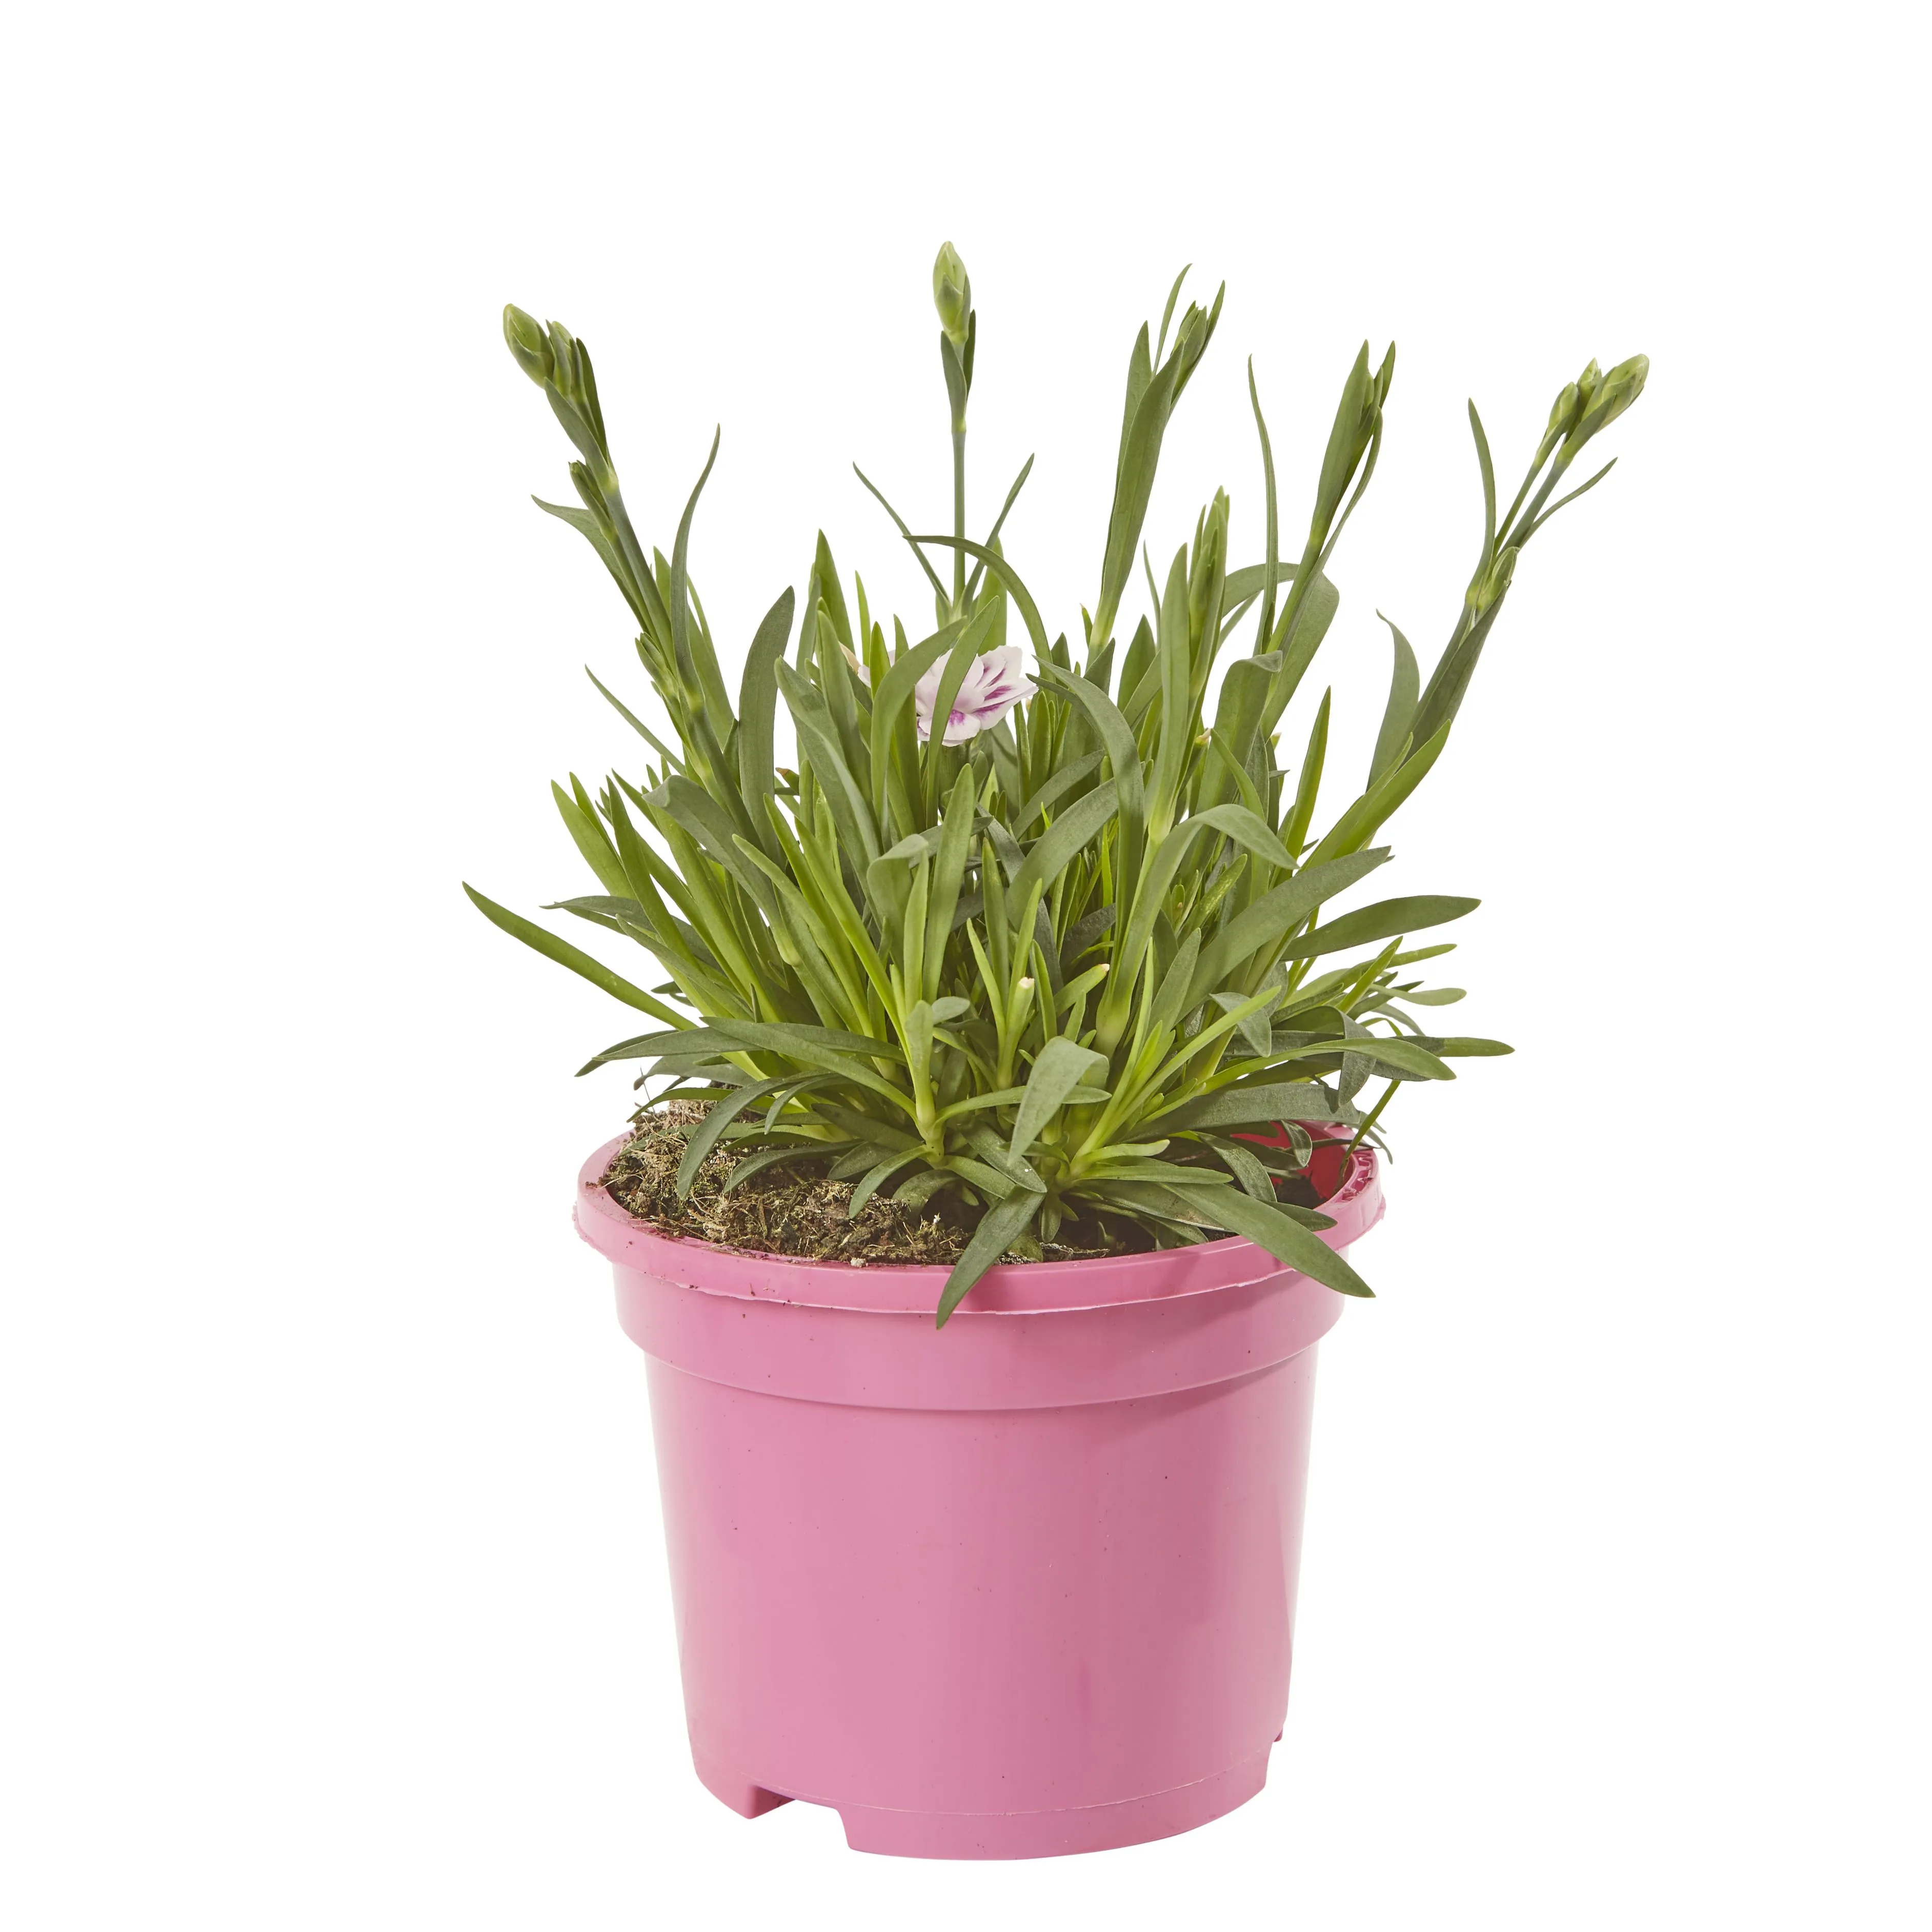 Dianthus Pink Kisses Summer Bedding plant, Pack of 6